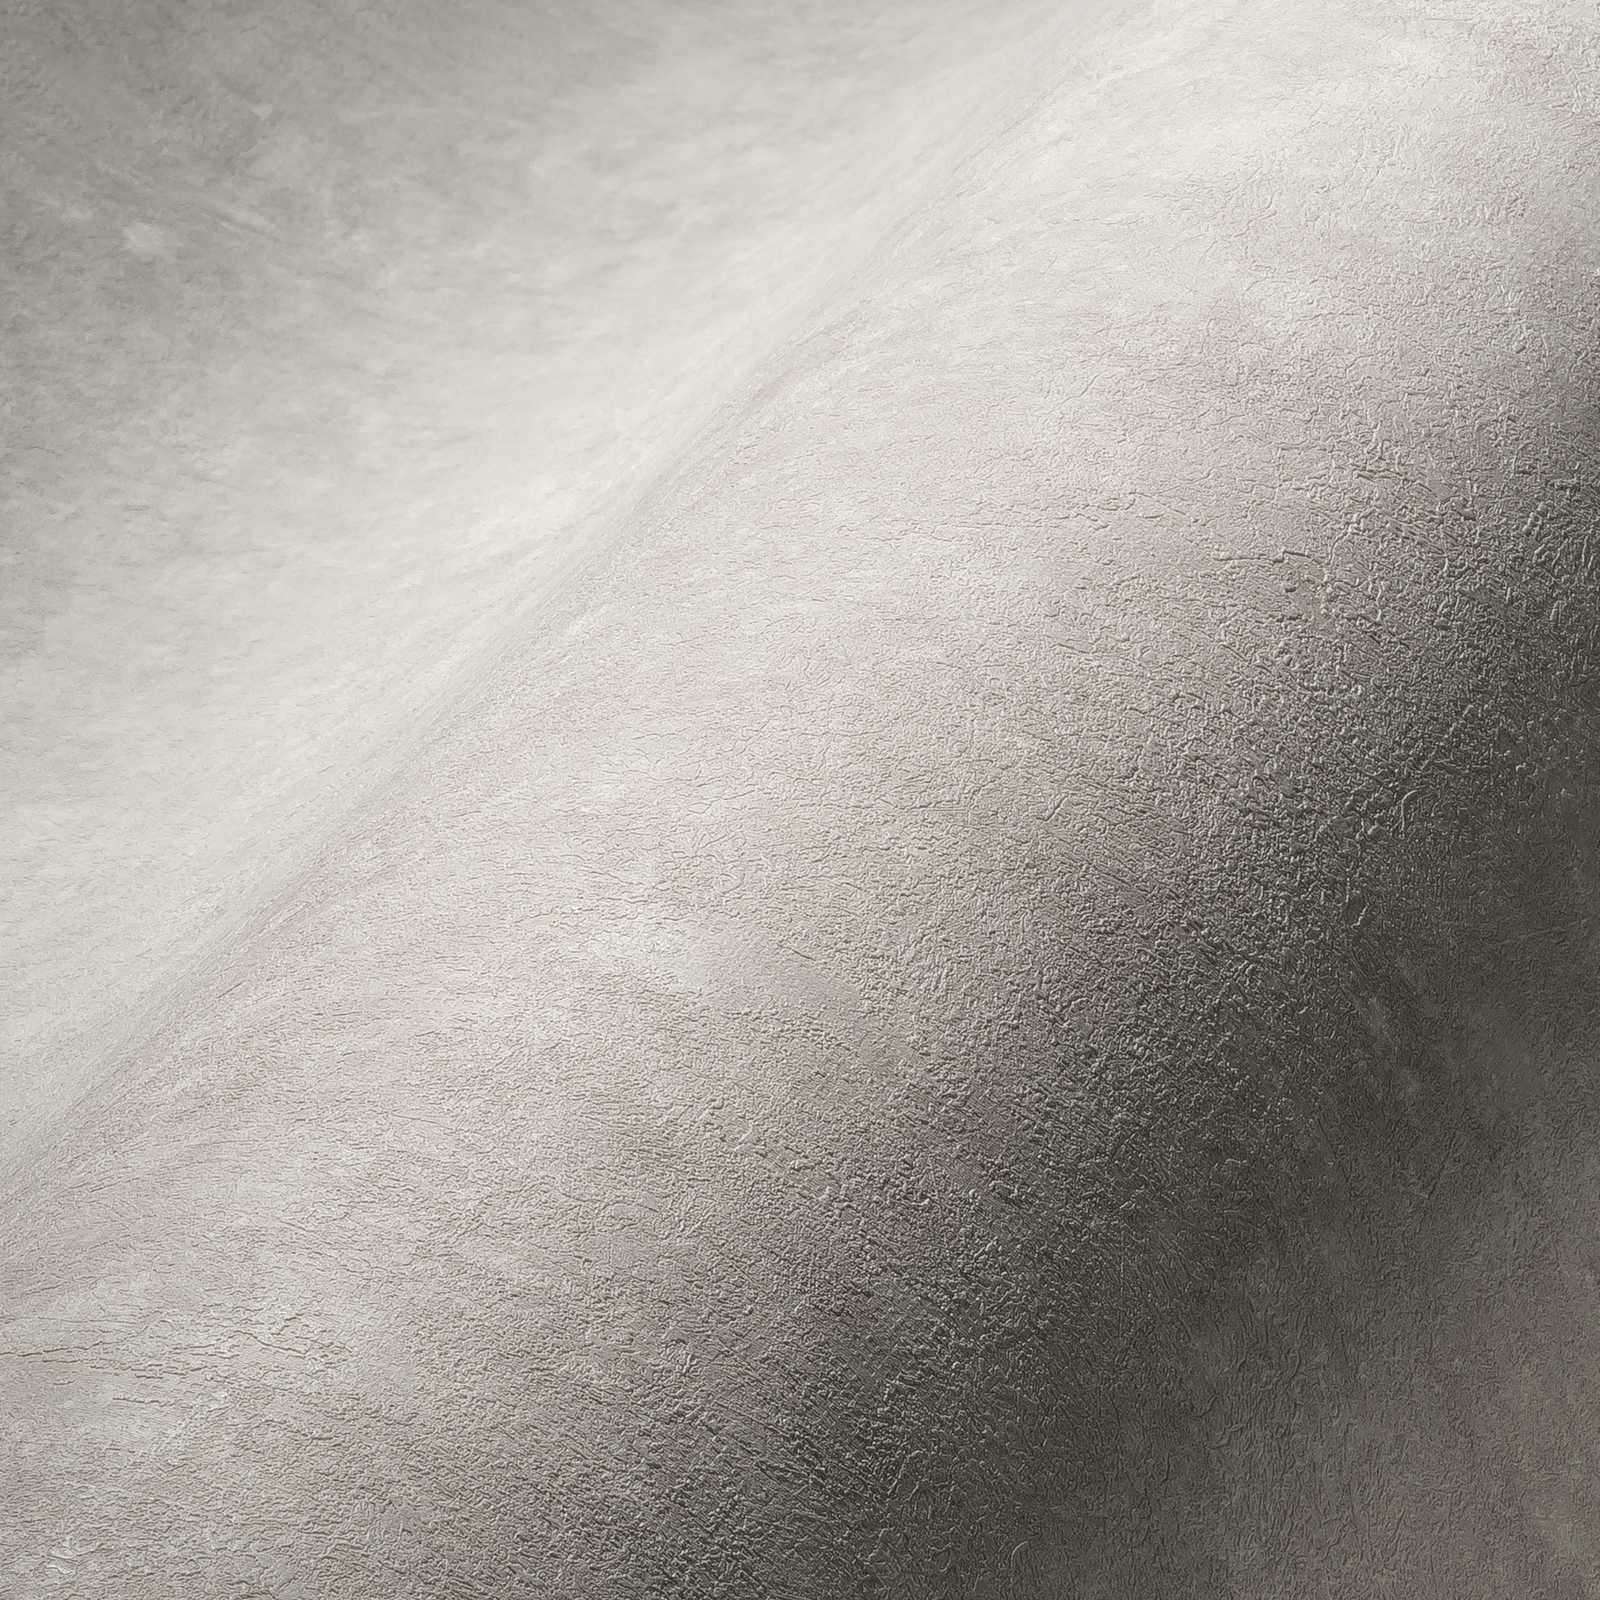             Plaster look wallpaper with texture effect in light grey
        